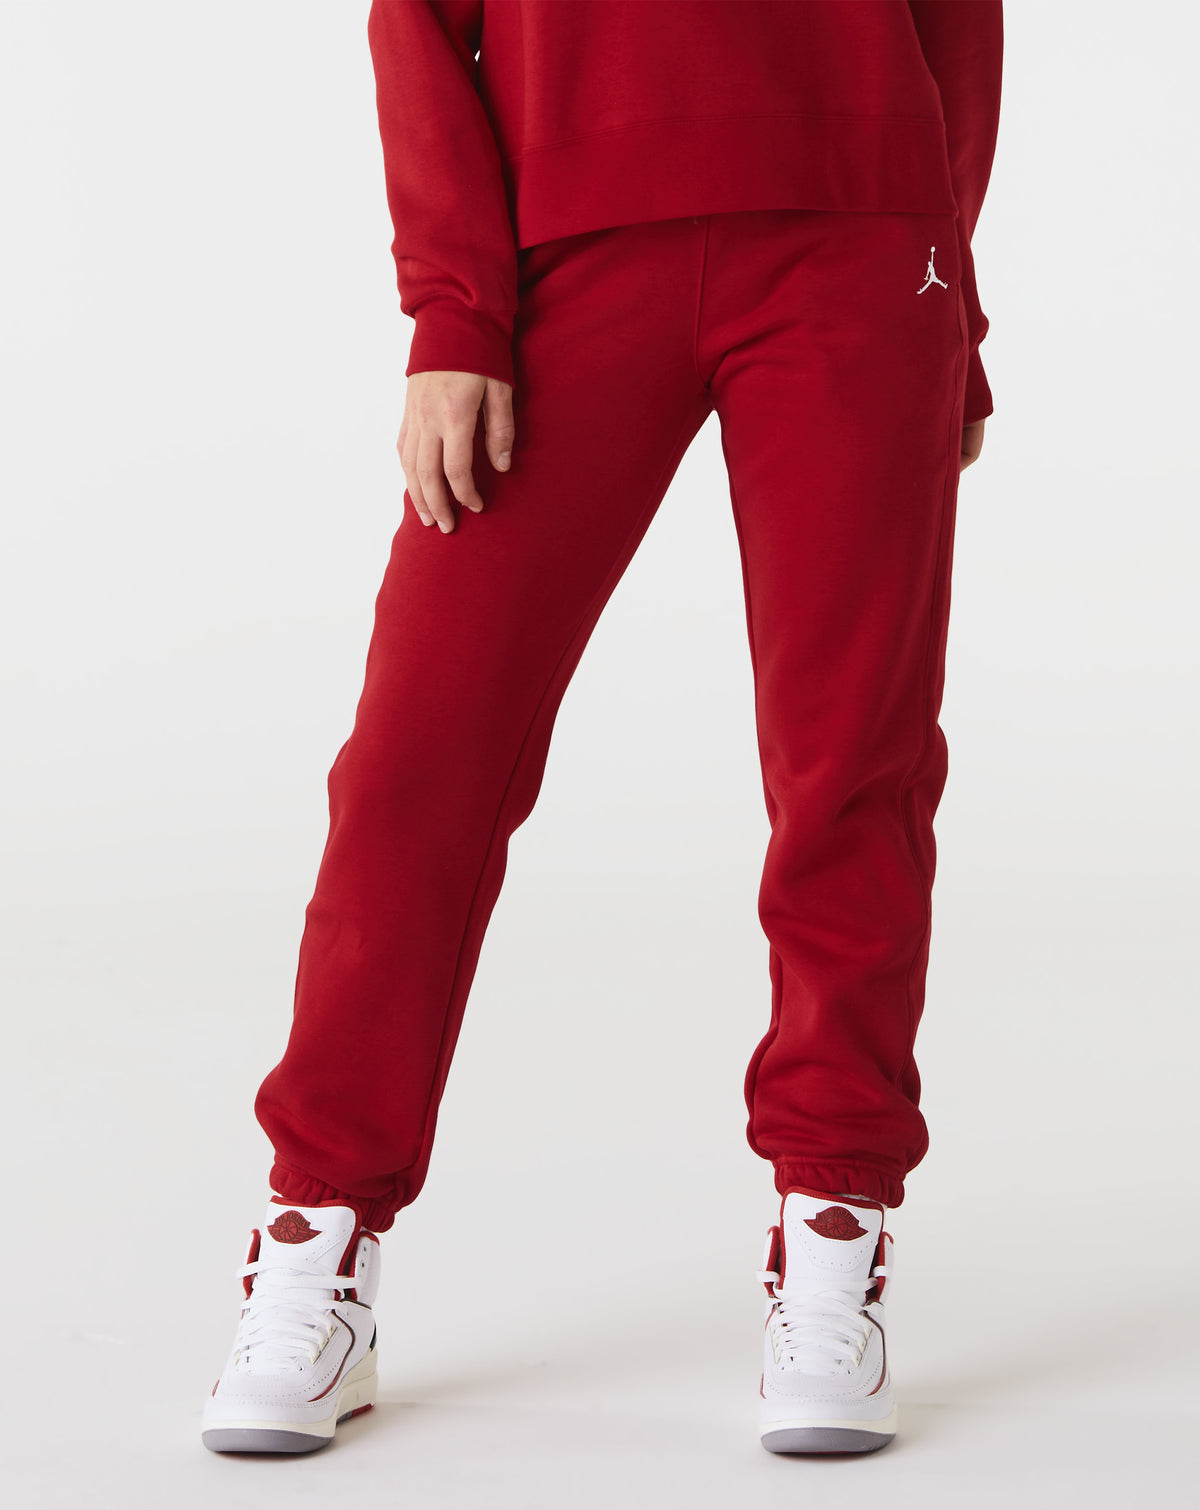 Air Jordan Women's Brooklyn Fleece Pants - Rule of Next Apparel